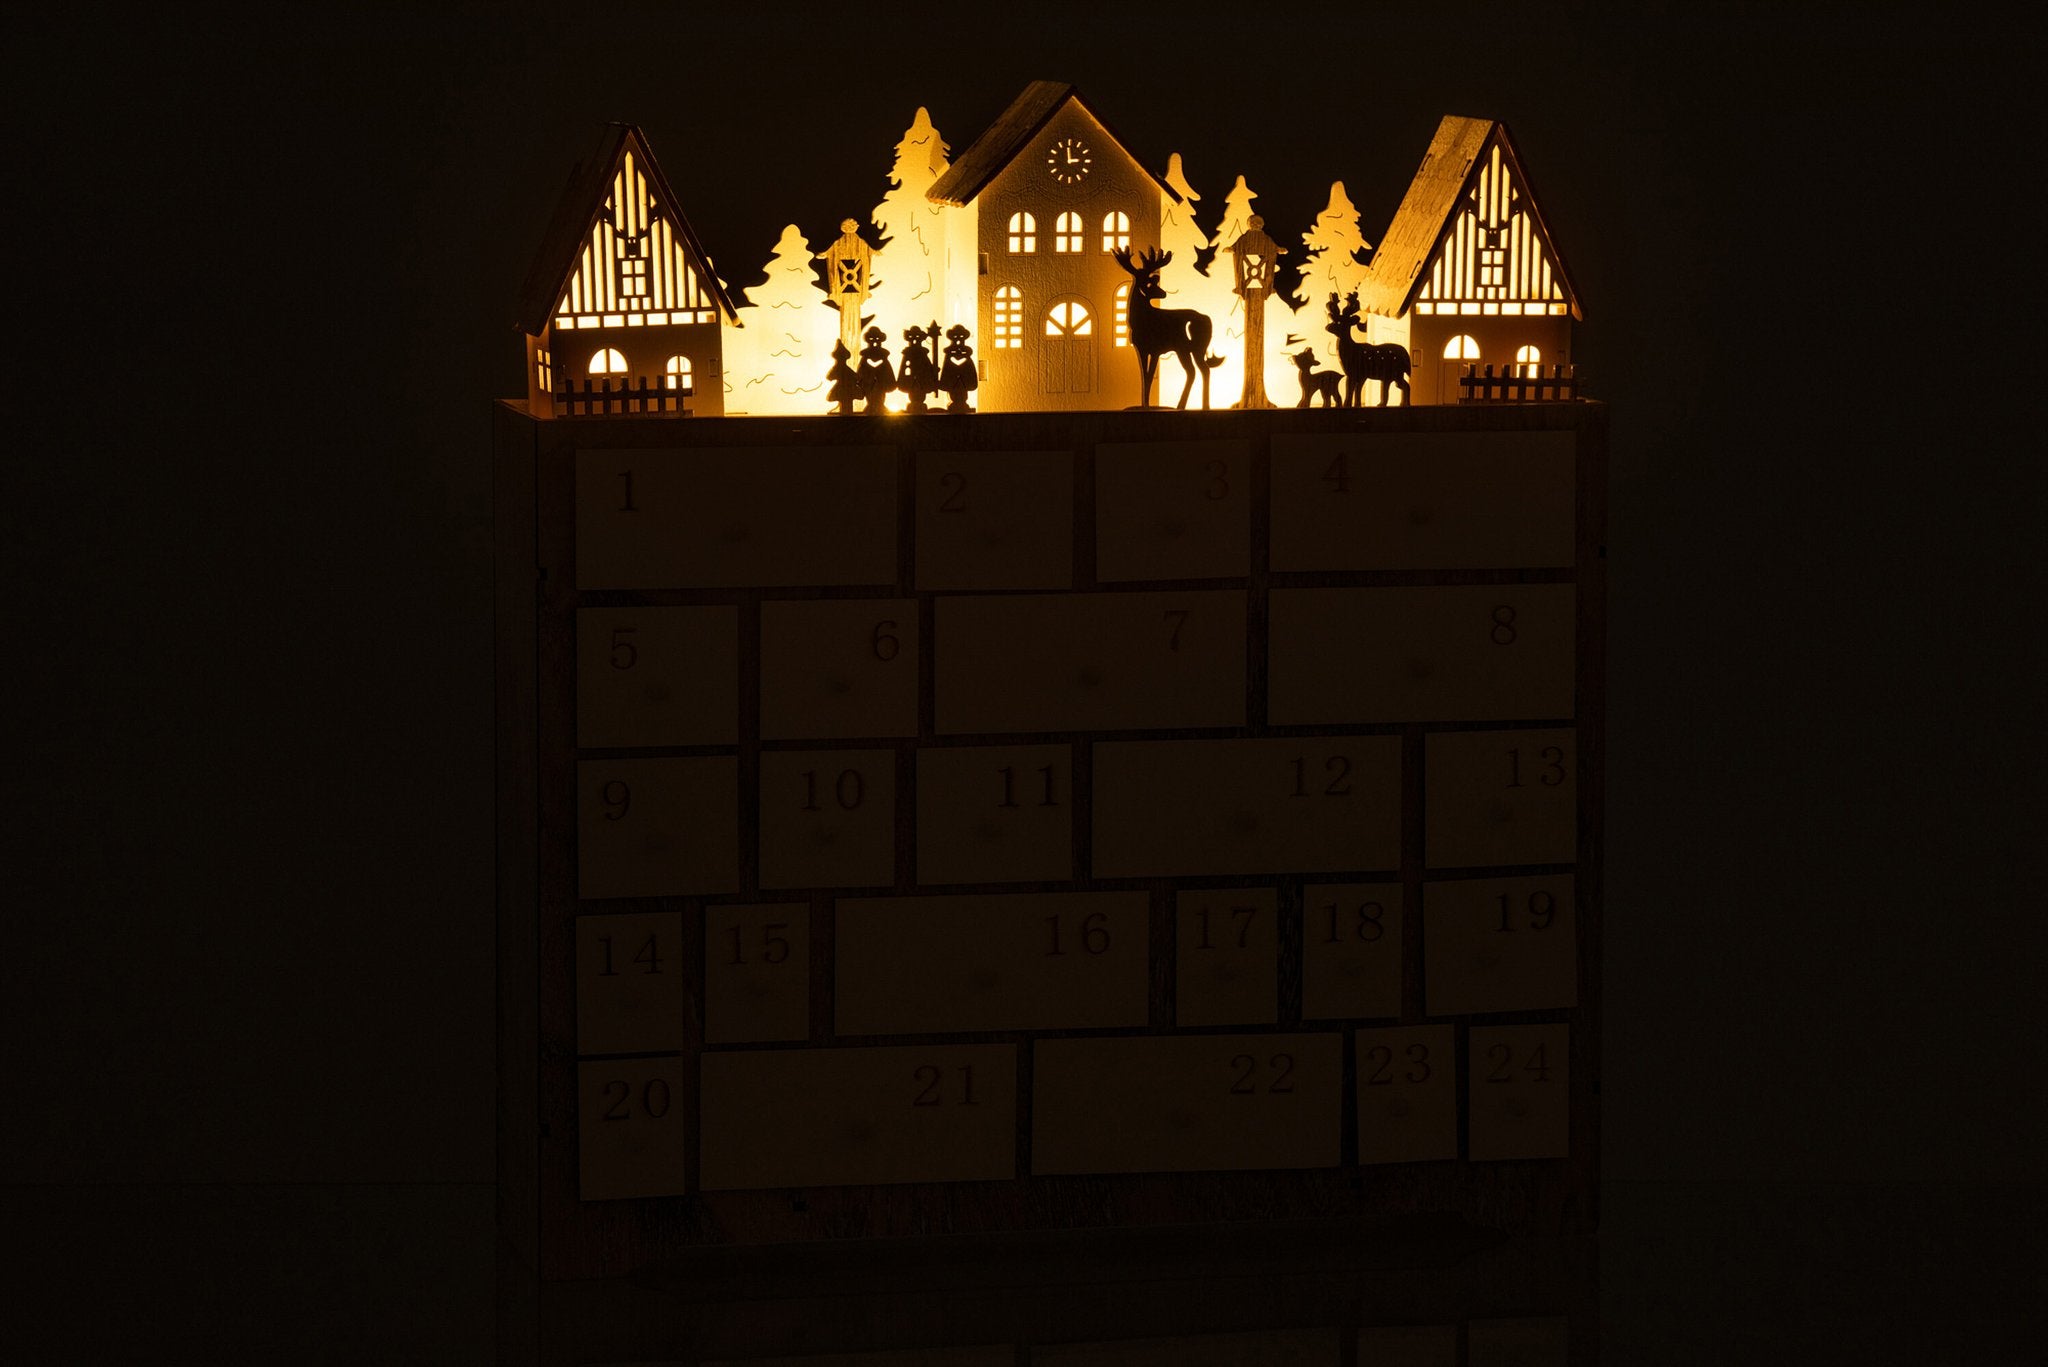 J-Line Adventskalender kerst - hout - beige - 40 cm - LED lichtjes - kerstversiering voor binnen